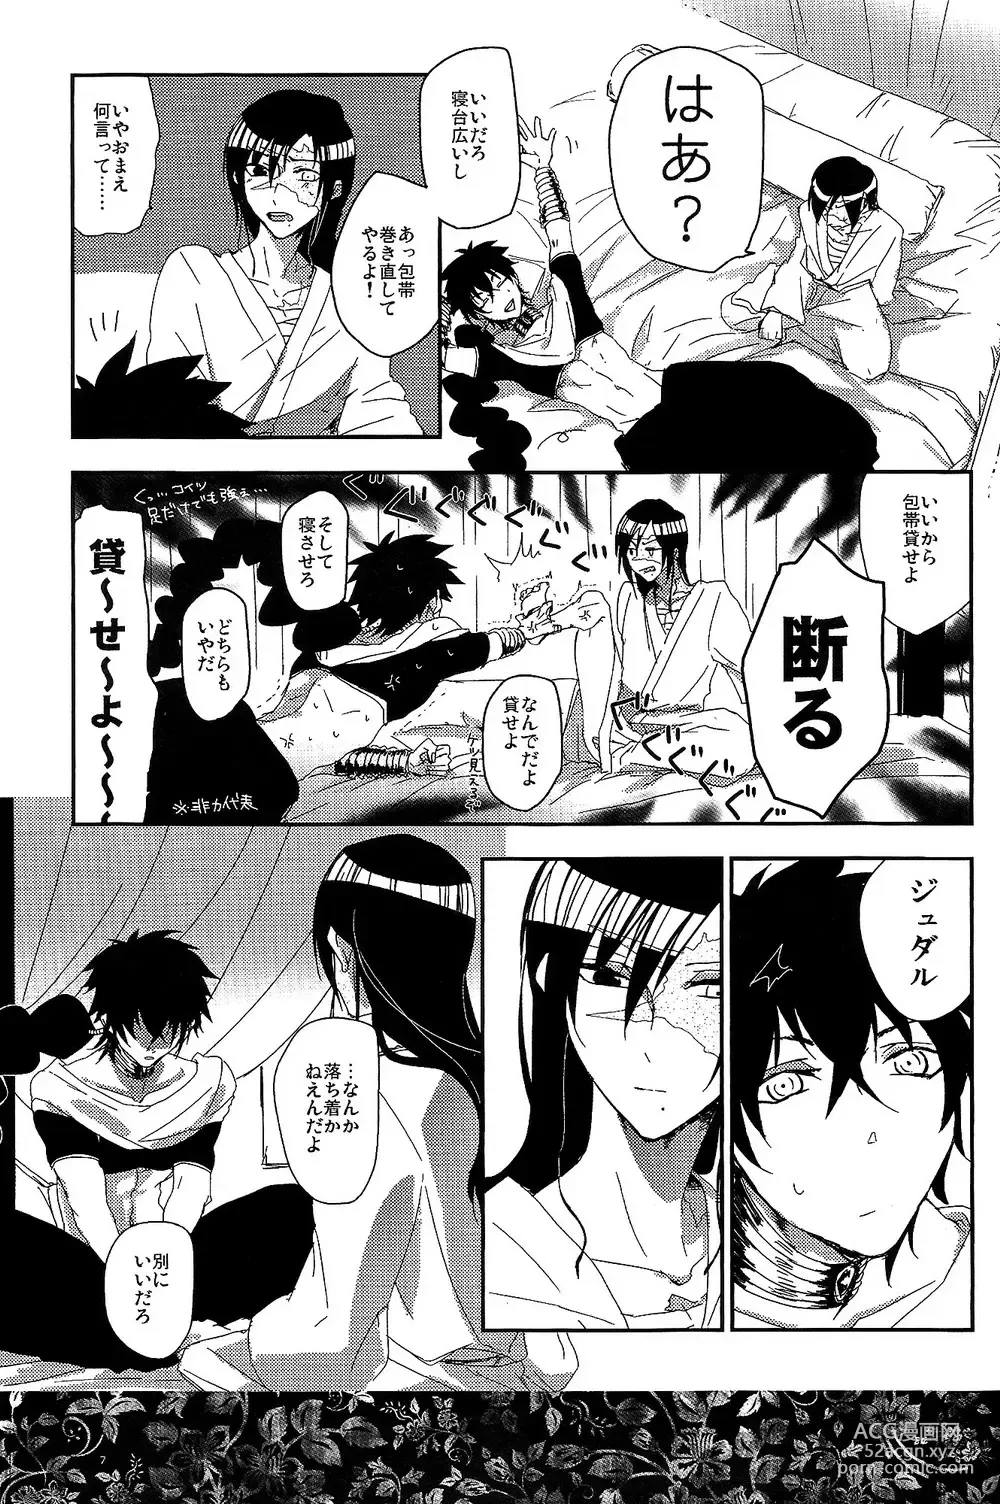 Page 6 of doujinshi GOLDEN ERROR